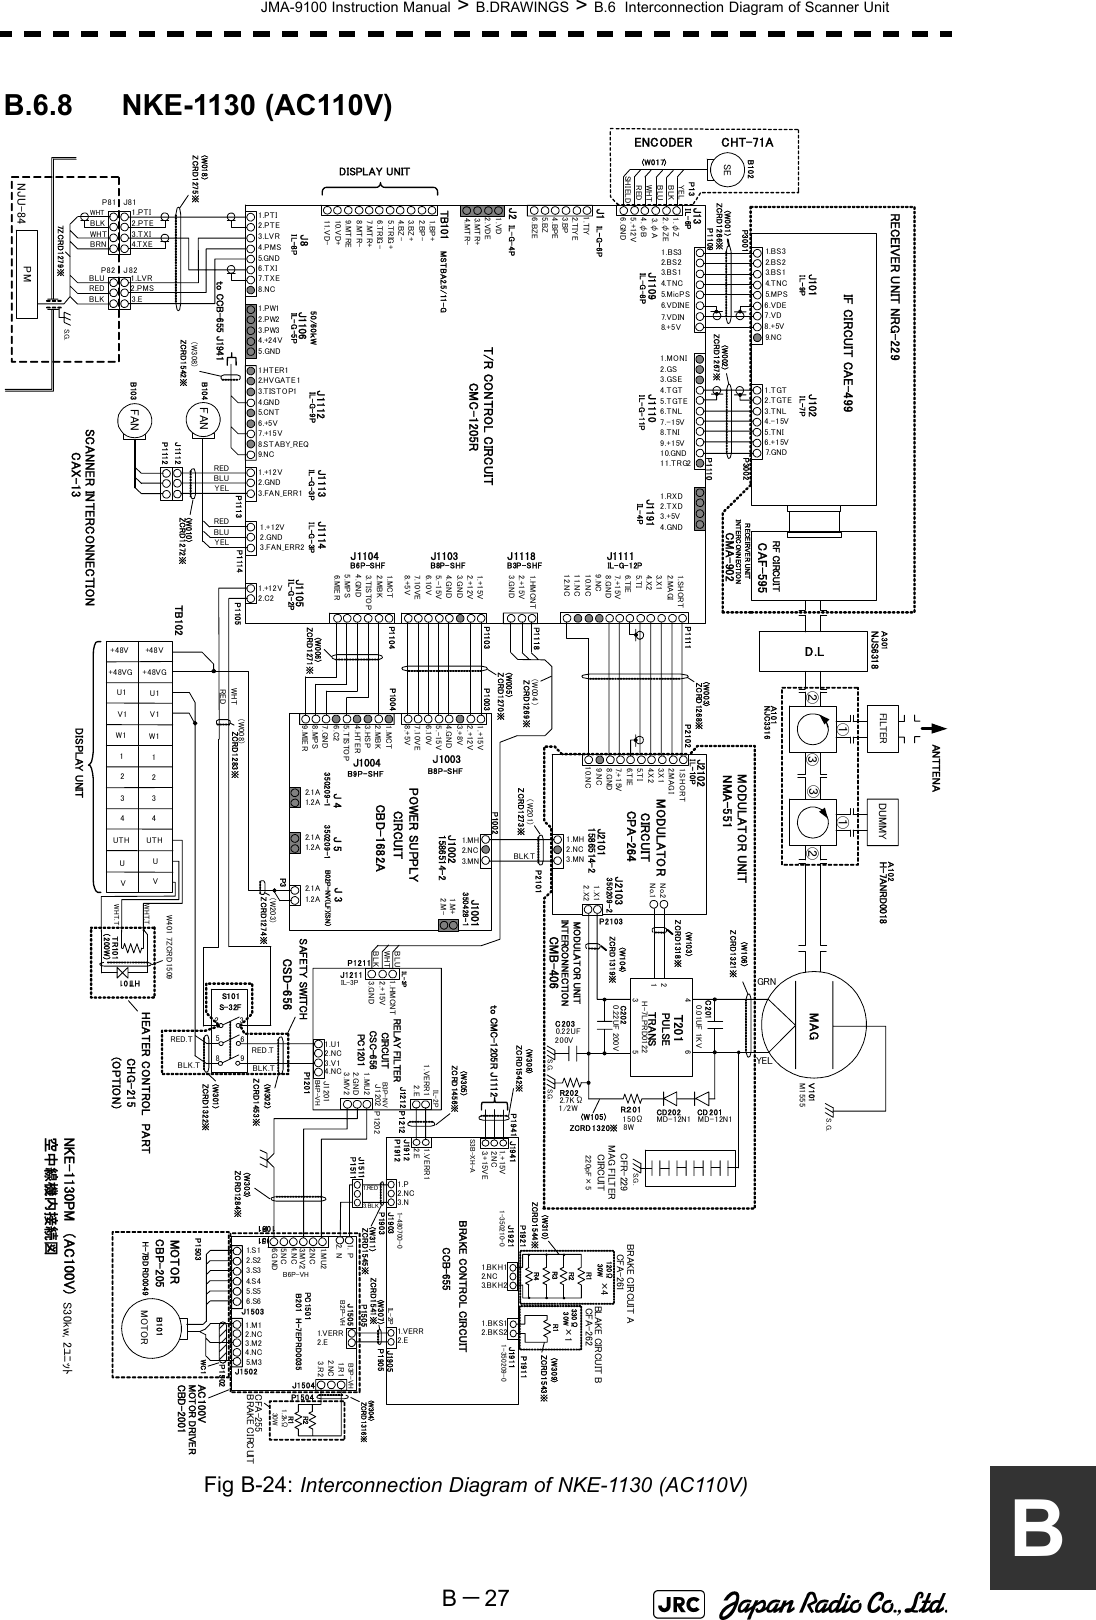 JMA-9100 Instruction Manual &gt; B.DRAWINGS &gt; B.6  Interconnection Diagram of Scanner UnitB－27BB.6.8 NKE-1130 (AC110V)Fig B-24: Interconnection Diagram of NKE-1130 (AC110V) NKE-1130PM　（AC100V)空中線機内接続図1.TGT2.TGTE3.TNL4.-15V5.TNI6.+15V7.GN D1. BS 32. BS 23. BS 14. T NC5.MPS6.VDE7.VDRECEIVER UNIT NRG-229IF CIRCUIT CAE-499J101IL-9PJ102IL-7PT/R CONTROL CIRCUITCMC-1205R1.MONI2.GS3.GSE4.TGT5.TGTE6.TNL7.-15V8.TNI9.+15V10.GND11.TRG21.BS32. BS 23. BS 14. T NC5. M ic P S6.VDINE7.VDIN8.+5V1.RXD2.TXD3.+5V4.GND1. S HO RT2.MAGI3. X 14. X 25. T I6. T IE7.+15V8.GND9.NC10.NC11.NC12.NC1.HMCN T2.+15V3.GND1.+15V2.+12V3.G ND4.G ND5.-15V6.10V7.10VE8.+5V1.MCT2.MBK3. T IS TO P4.GND5.MPS6.MIE R1.TIY2.TIYE3.BP4.BPE5.BZ6.BZE1.+12V2.GND3.FAN_ERR11.HTER12.HVGA T E 13.TISTOP14.GND5.CN T6.+5V7.+15V8.STABY_REQ9.NC1.PW12.PW23.PW34.+24V5.GND1.PTI2.PTE3.LVR4.PMS5.GN D6.TXI7.TXE8.NC1. BP +2. BP -3.BZ +4.BZ -5.TRIG+6.TRIG-7.MTR+8.MTR-9. MT R E10.VD+11.VD-1.VD2.VDE3. MT R +4. MT R -J1118J1103J1104 J1111J1191J1110J1109TB101J8 J1106J1112 J1113IL-G-12PIL-8PIL -G -8P IL-G-11PB6P-SHFIL-G-9PMSTBA2.5/11-GIL- G -5PB3P-SHFIL-4PB8P-SHFIL -G -3 PMAGPOWER SUPPLY CIRCUITCBD-1682A1.+15V2.+12V3.+8V4.GND5.-15V6.10V7.10VE8.+5V1.MCT2.MBK3.HSP4.HTER5.TISTOP6.C27.GND8.MPS9.MIER2.1A1.2A2.1A1.2A2.1A1.2A1.MH2.NC3.MN1.MH2.NC3.MN1.X12.X2No.2No.1214356FILTERJ1004 J1003J 5J 4 J 3J1002J2102J2101J2103ANTTENA1. S HO R T2.MAG I3. X 14. X 25. T I6. T IE7.+15V8.GND9.NC10.NCB9P-SHF B8P-SHFB02P-NV(LF)(SN）350209-1IL-10P350209-2350209-1MODULATOR CIRCUITCPA-264MODULATOR UNIT INTERCONNECTIONCMB-406D.L①②③①②③GRNYELC2010.01UF 1KVC2020.22 U F 2 00 VR202 2.7KΩ1/2WC2030.22UF200VT201 R２01150Ω8WH-7LPRD0122CD202 CD201MD-12N1MD-12N1NJC3316Ａ101M1555Ｖ101R ECEIRVER UNIT INTERCONN ECTIONP3001 P3002P1109 P1110P1104P1103 P1003P1004P1111PULSE TRANS（W201)BLK.TP3P2103P1118DUMMYＡ102H-7ANRD0018(W001) (W002)(W003)(W006)P10021.+12V2.GND3.FAN_ERR2J1114IL-G-3P1.+12V2.C2J1105IL-G-2PP1105MODULATOR UNITNMA-551SCANNER INTERCONNECTIONCAX-13(W106)ZCRD1321※(W103)ZCRD1318※(W104)ZCRD 1319※(W105)ZCRD1320※ZCRD1267※J1IL-G-6PJ2IL-G-4PＡ301NJS6318ZCRD1268※CMA-902ZCRD1266※ZCRD1273※ZCRD1269※（W004）(W005)ZCRD1270※ZCRD1271※50/60ｋWP2101P21028.+5V9.NCRF CIRCUIT CAF-595J1001350428-11.M+2.M-1586514-21586514-2S.G.S.G. S.G.1.φZ2.φZE3.φ A4.φB5.+12V6.GNDJ13IL-6PSEYE LBLKBLUWHTREDSH I ELDB102ENCODER CHT-71AP13(W017)DISPLAY UNITFANREDBLUYELB104B103 FAN(W010)P1113 P1114(W301)TB102S101S-32F239568SAFETY SWITCHCSD-656(W203)ZCRD1274※REDWHTREDBLUYELZCRD1272※P1112J11121.PTI2.PTE1.LVR2.PMS3.E3.TXI4.TXEJ82J81PMP81P82WHTBLKBLUREDBLKWHTBRNNJU-847Z CRD1 27 9 ※(W018)ZCRD1275※(W008)ZCRD1283※S. G.S30kw, 2ﾕﾆｯﾄRED.TRED.TBLK.TBLK.TZCRD1322※(W302)ZCRD1453※S.G.CFR-229MAG FILTER CIRCUIT22 0pF ×5P1201+48V+48VGU1V1W1U1W1V1DISPLAY UNIT+48V+48VG12VU123434VUUTHUTHTH101TR101（200W）HEATER CONTROL  PARTCHG-215(OPTION)WHT.TWHT.TW401 7ZCRD1509to CMC-1205R J1112(W308)ZCRD1542※WHTBLKBLUMOTOR DRIVERCBD-2001ZC RD 145 6※(W305)P1212BRAKE CIRCUITCFA-255J15011.V ERR2.EH-7EPRD0035B201J1505PC1501P1501B2P-VHP1505RELAY FILTER CIRCUITCSC-656PC1201IL-3P1.HMCNT2.+15V3.GNDP1211P12021.MU2J12121.VERR12.E3.MV2J1202J1201J12111.U13.V12.NC4.NC2.G N DB4P-VHB3P-NVIL-3PIL-2P1.VERR12.E1.VERR2.E1.P2.NC3.N1. P2. N1.BKH13. BK H 21.BKS12.BKS21.+15V2.NC3.+15VEP1941 J1941J1903P1903J1905P1905J1912P1912BRAKE CONTROL CIRCUITCCB-655P1502J1921P1921J1911P19111.RE D3. BL KJ1511P1511IL-2PS3B-XH-A1-350210-0 1-350209-01-480700-0ZCRD1542※(W308)ZCRD1545※(W311) ZCRD1541※(W307)ZCRD1284※(W303)AC100VWC1ZCRD1543※(W309)ZCRD1544※(W310)BLAKE  CIR CUI T BCFA-262BRAKE CIRCUIT ACFA-261R1R2R3R4R1120Ω30W330Ω30W×4×12.NC4.NC1. S 12.S23.S34. S 45.S56.S6J1502J15033.M21.M15.M3P1503MOTORMOTORB101CBP-205H-7BDRD00492.NC(W304)ZCRD1316※R1R21.2kΩ30WP15041.R 13.R2J1504B3P-VH2.NC3.M V 21.M U22.N C4.NC5.N C6.G N DB6P-VHto  CCB-655 J1941